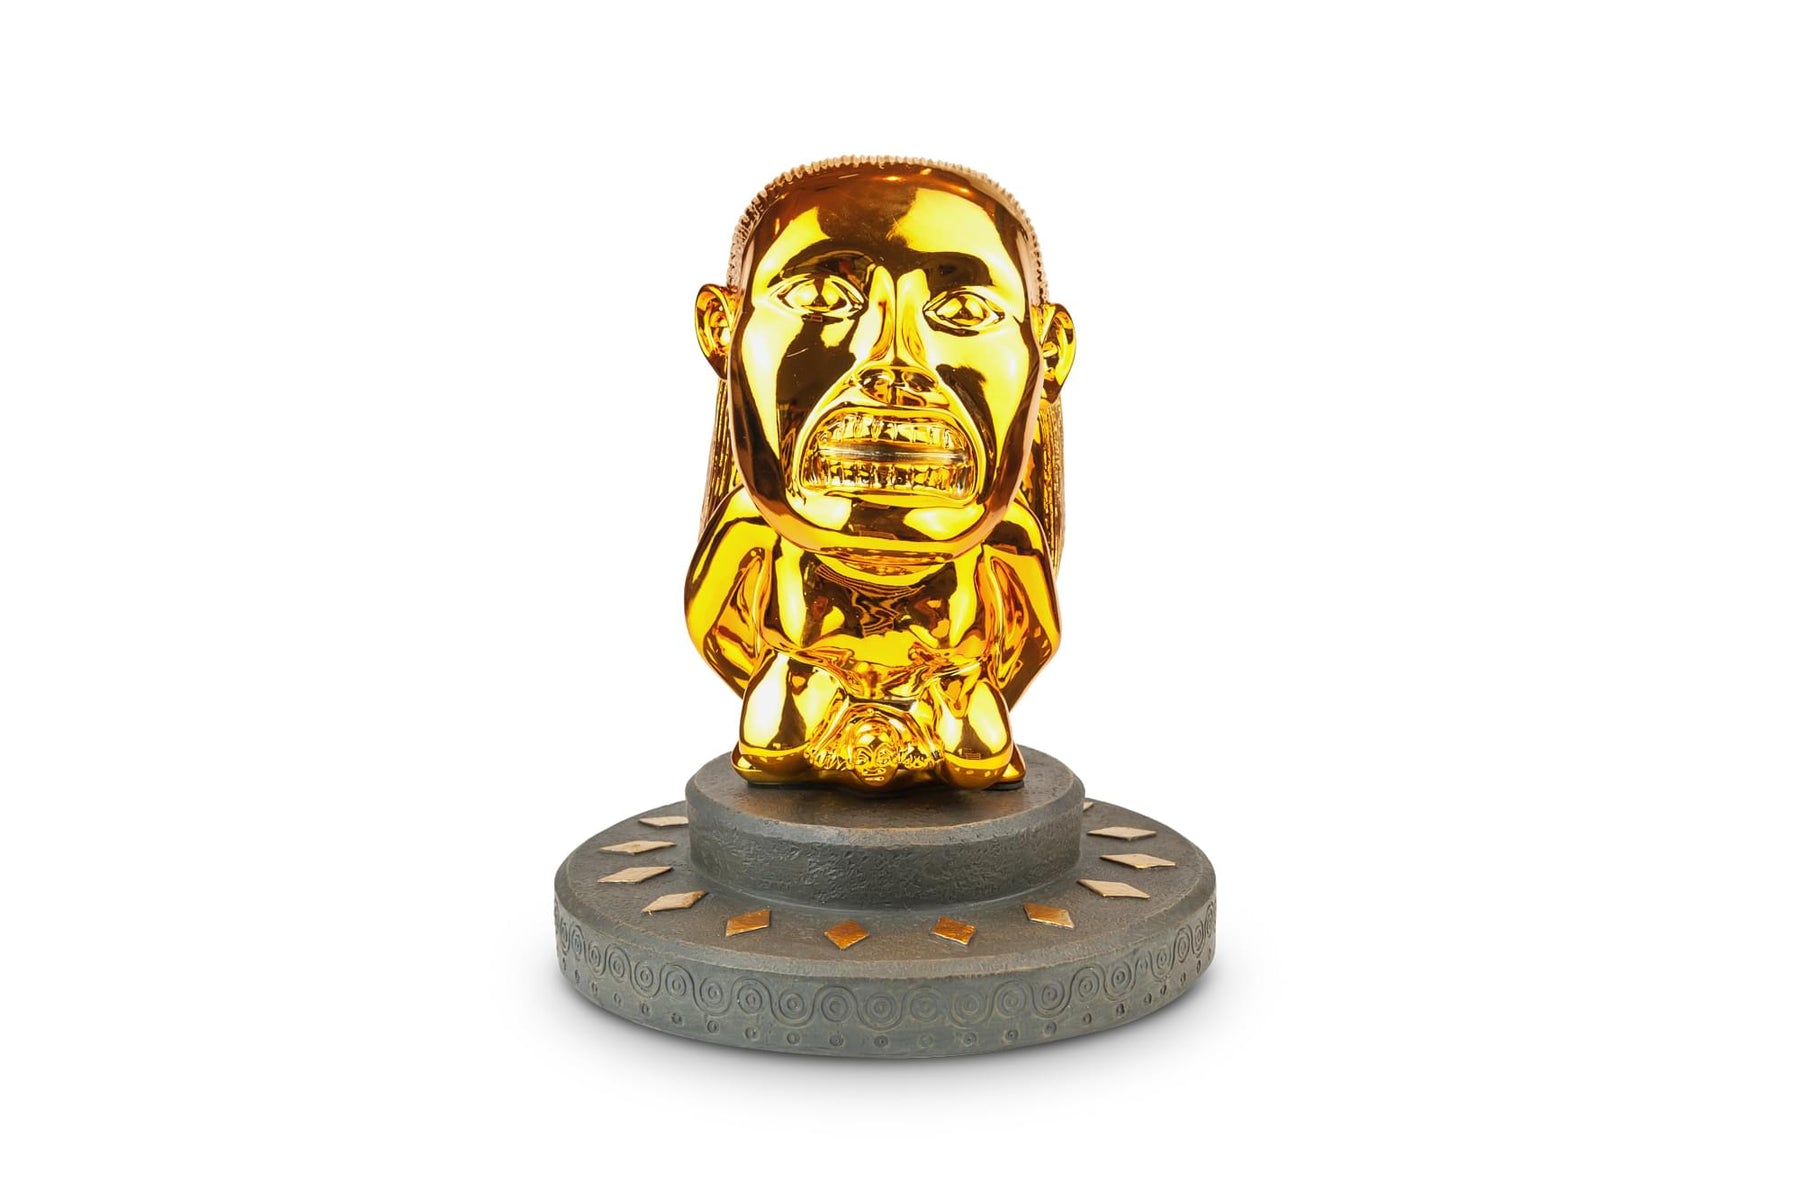 Indiana Jones Golden Fertility Idol Statue Display Base | Premium Movie Replica